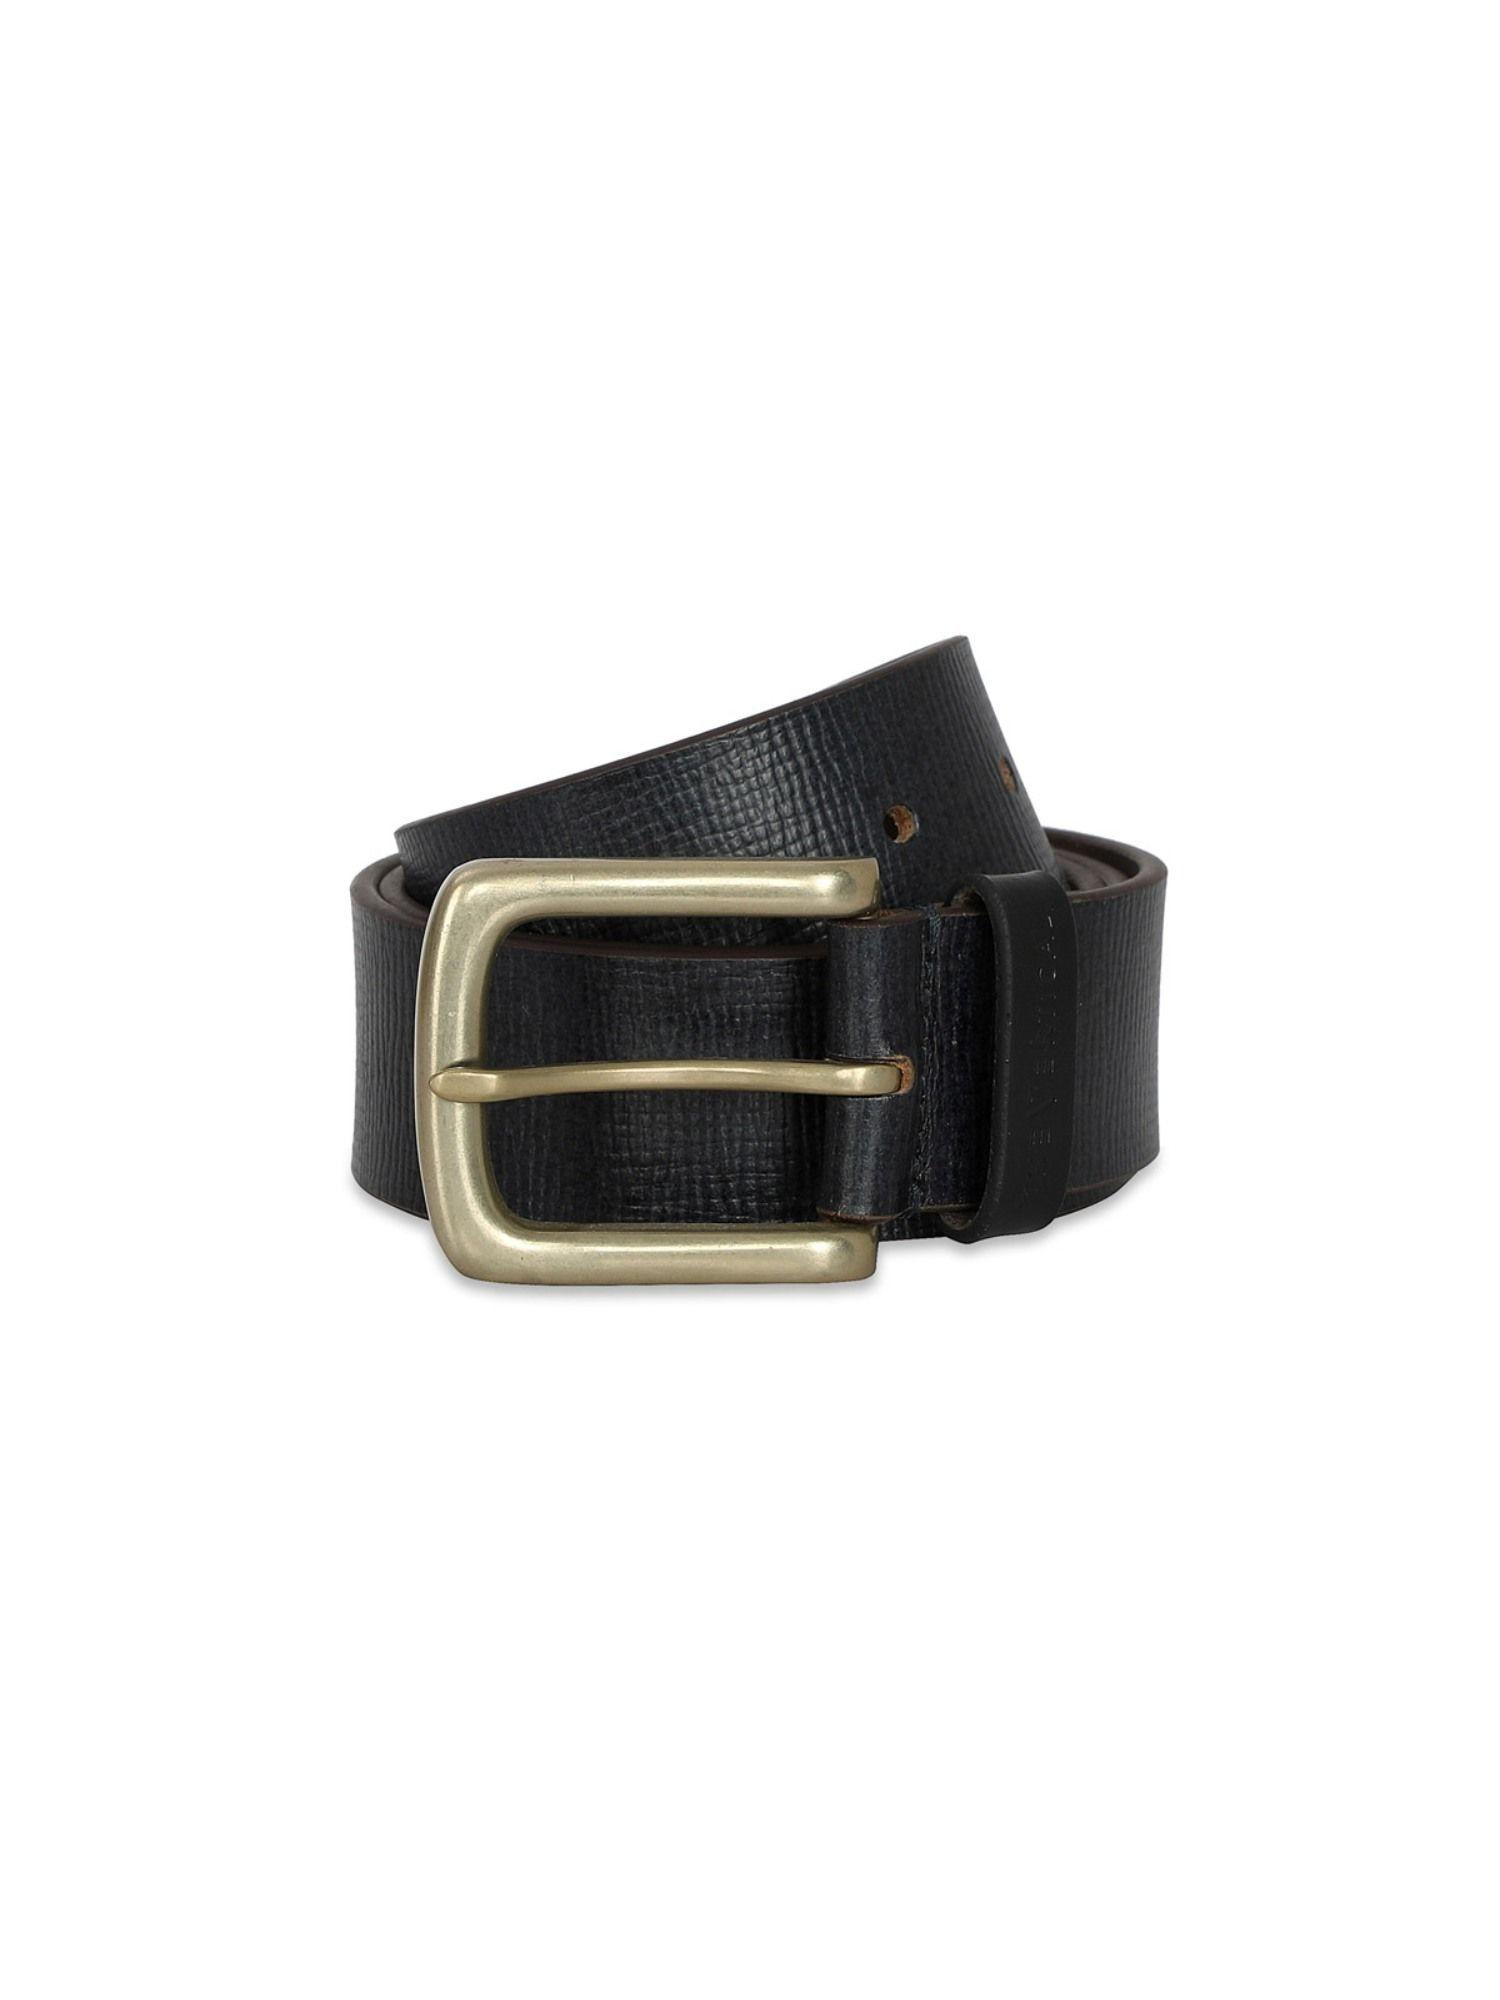 rue mens leather belt textured navy blue s 8903496179910